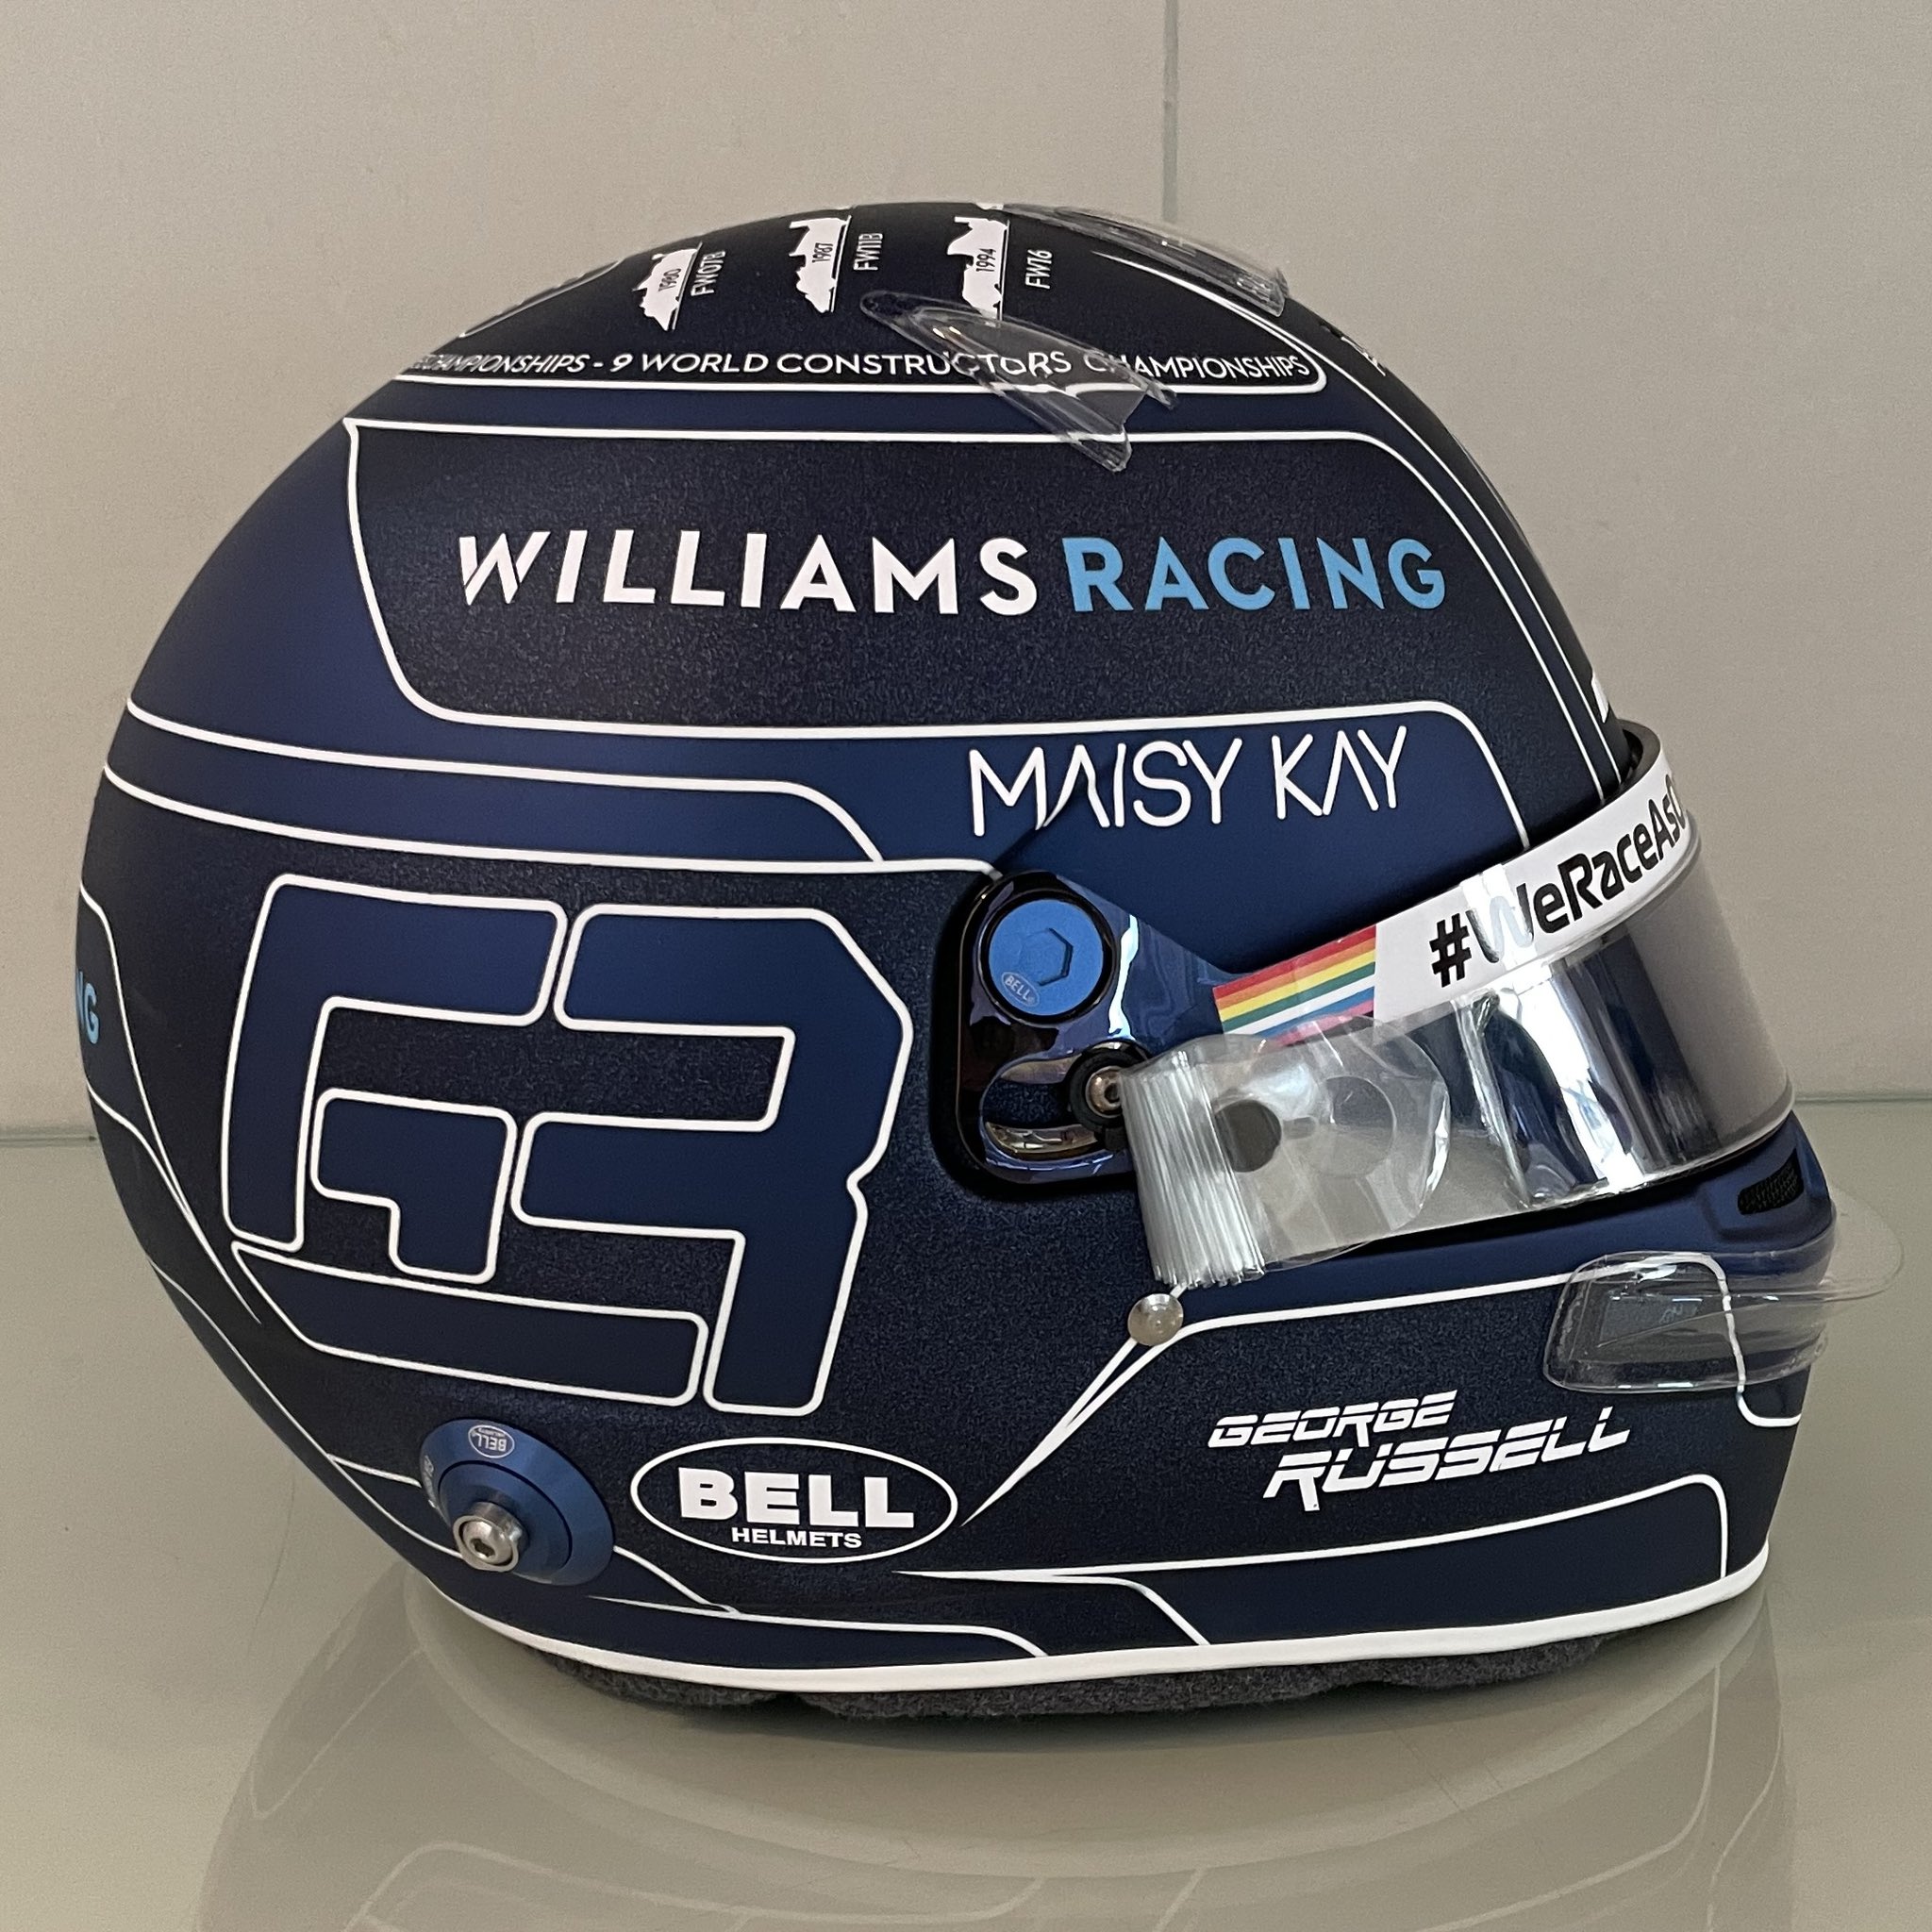 George Russell's 2020 Abu Dhabi Grand Prix helmet